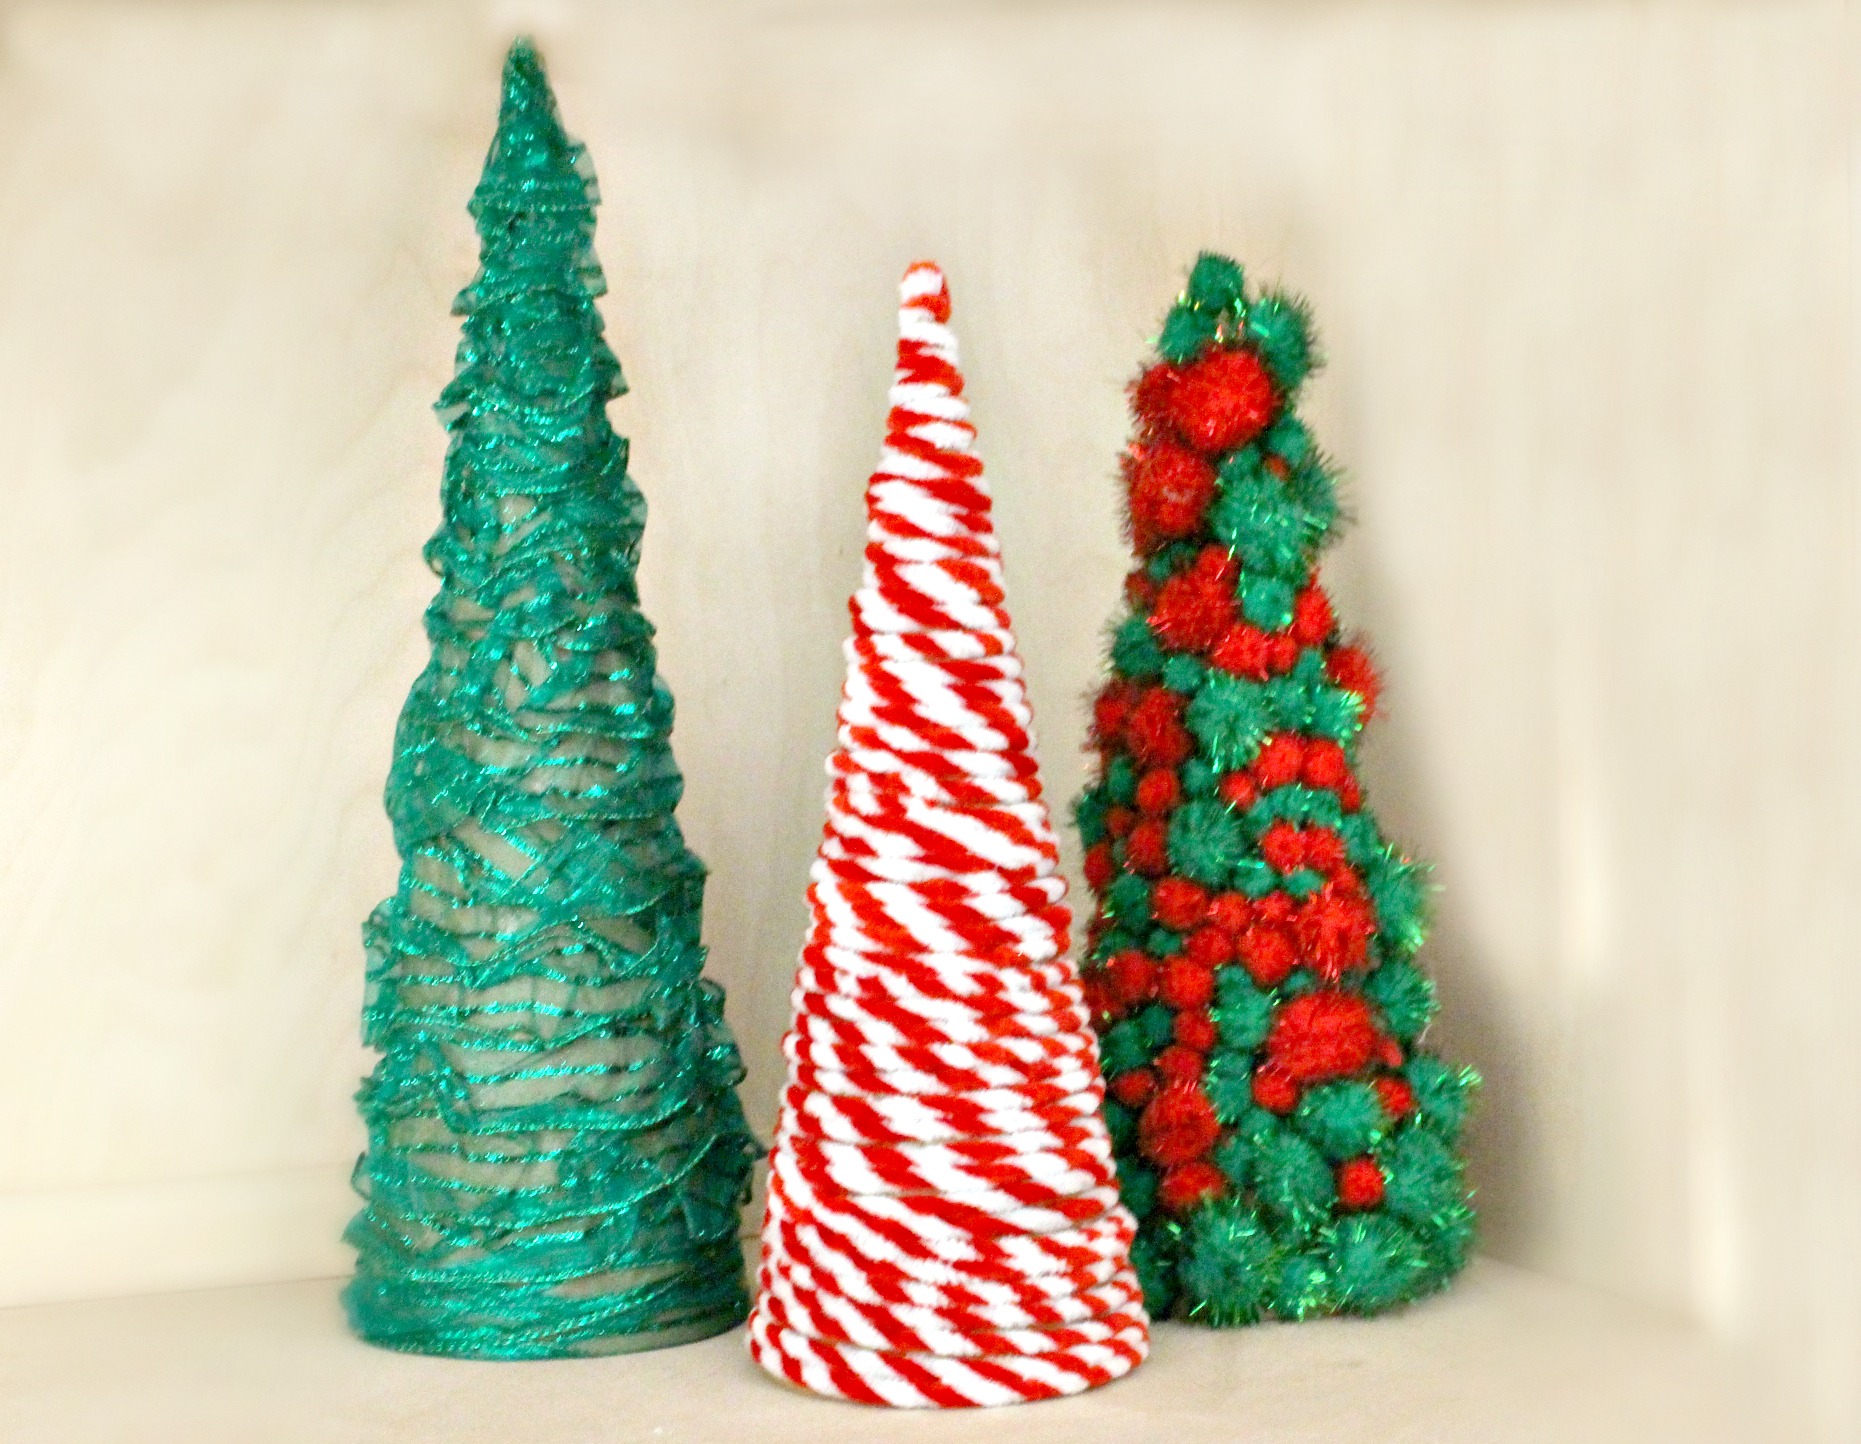 https://jennyatdapperhouse.com/wp-content/uploads/2016/11/Decorated-Cone-Christmas-Tree-Home-Decor-DIY-jenny-at-dapperhouse-blog-.jpg